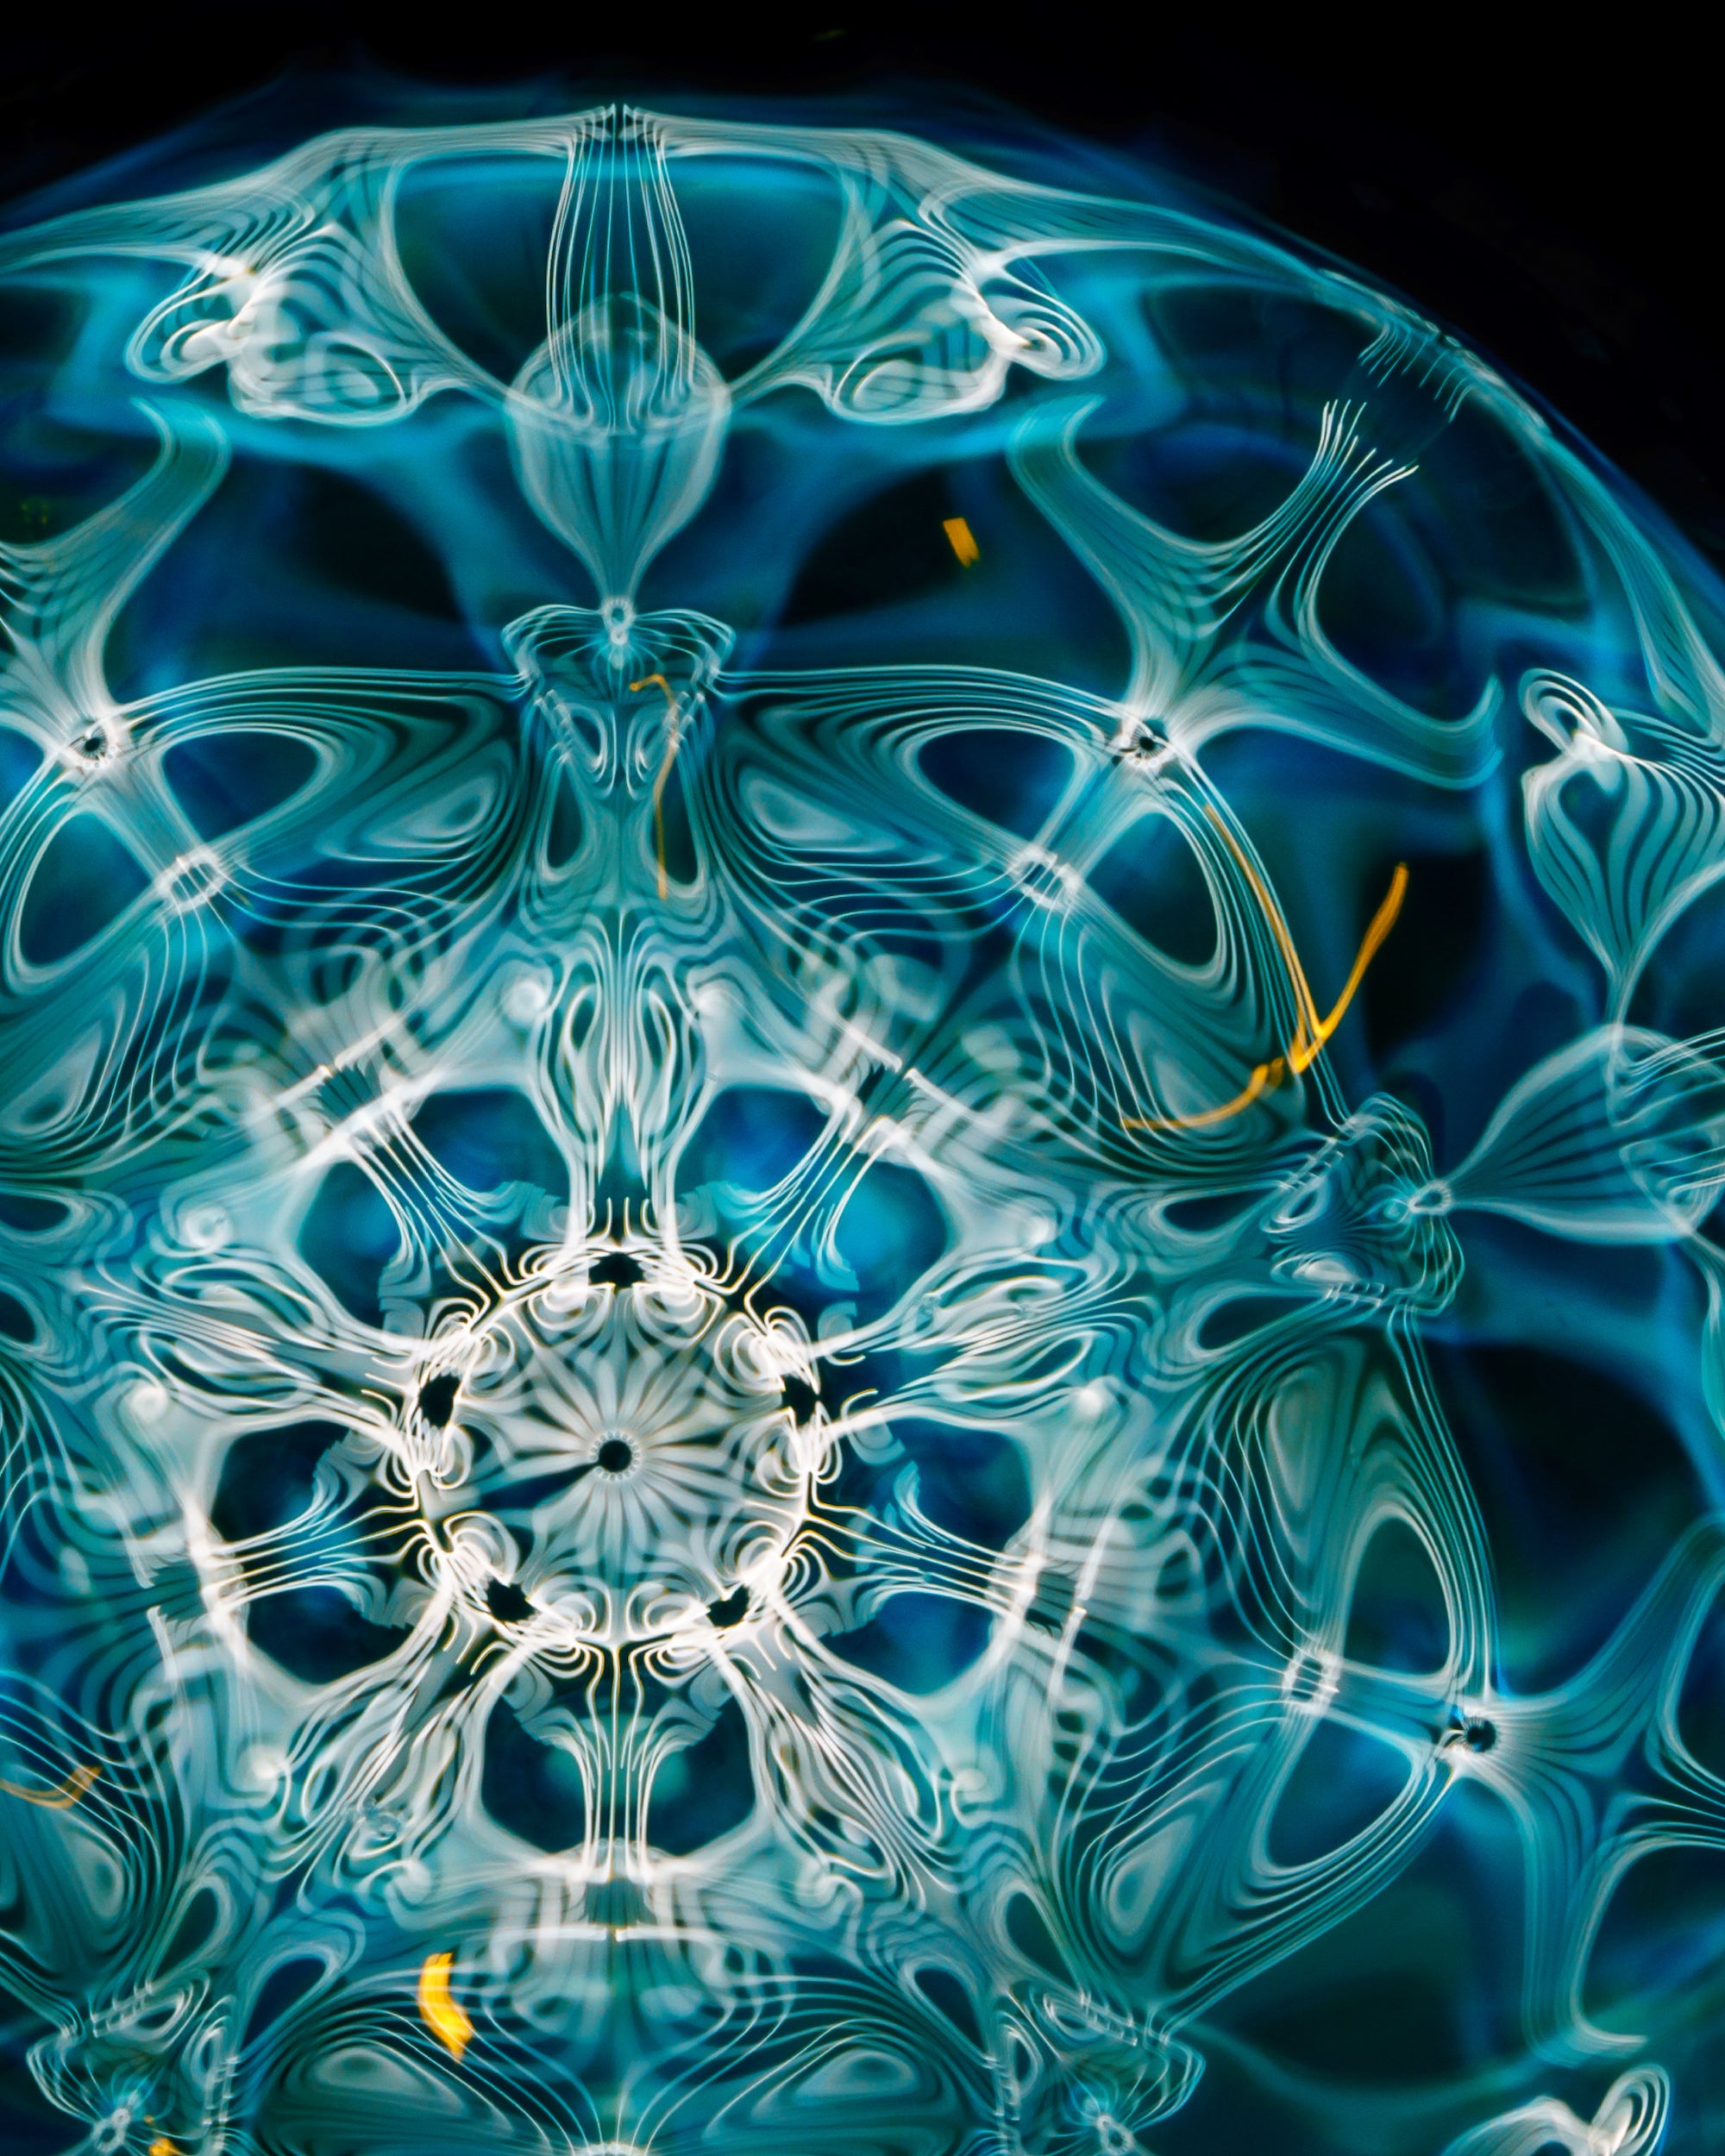 cymatics photo print 26Hz (Note G#) - Journey of Curiosity